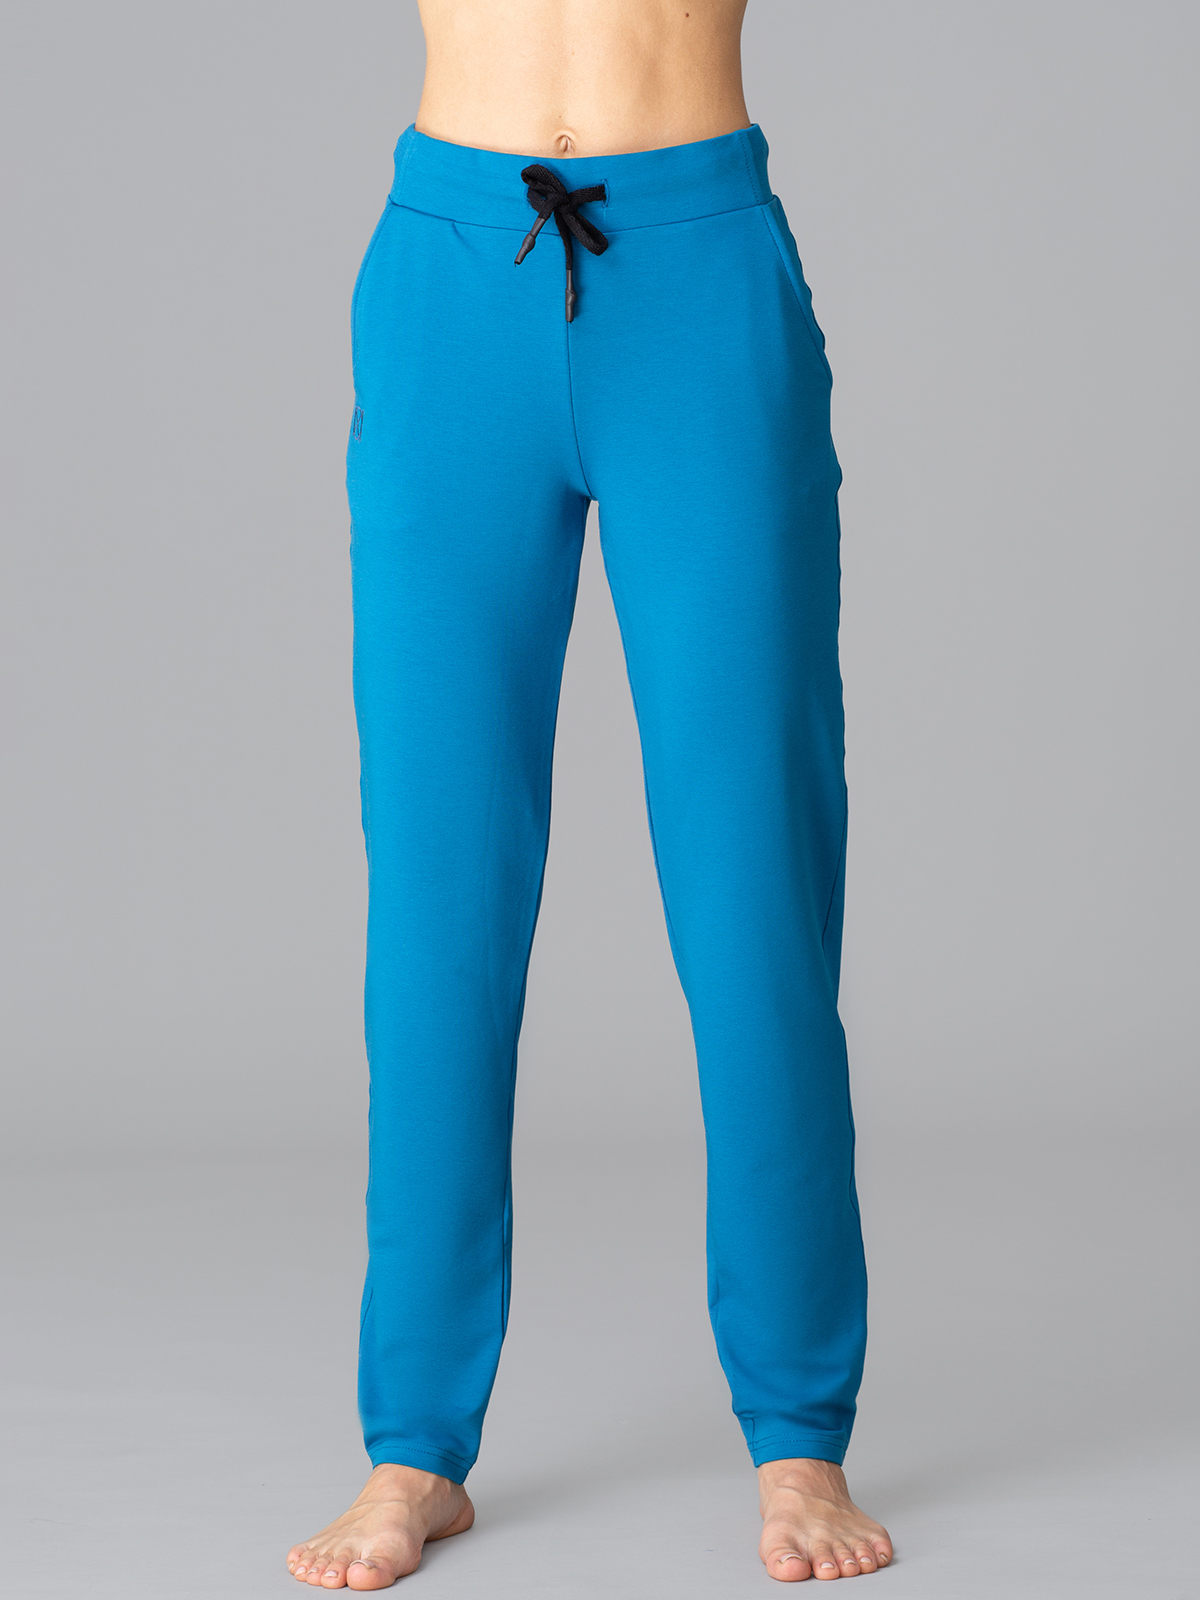 Брюки Oxouno OXO 2385-413 спортивные брюки размер S, голубой (Голубой)